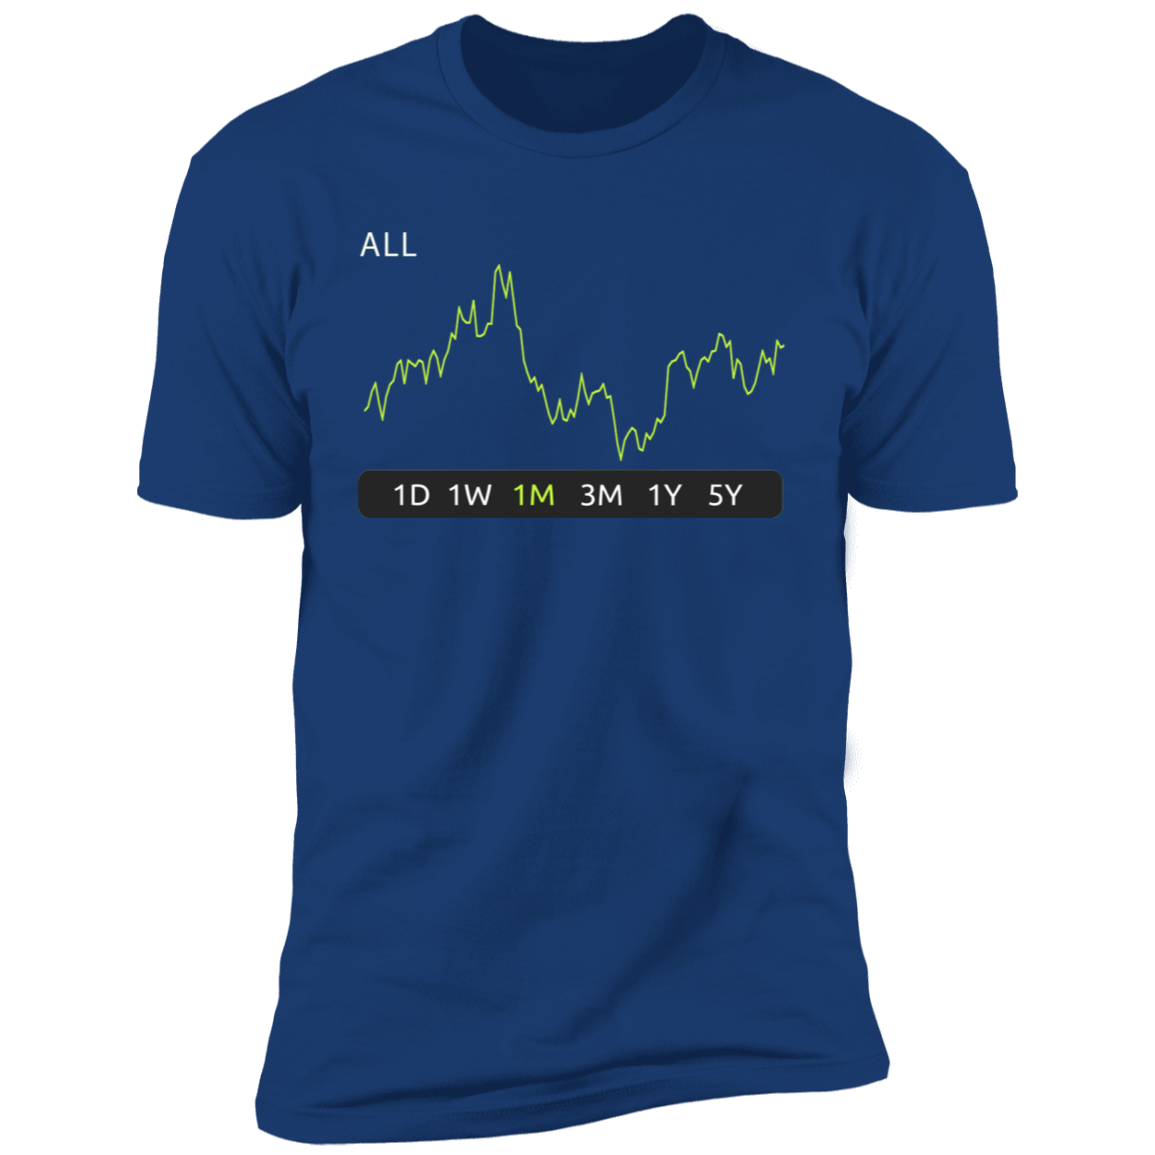 ALL Stock 1m Premium T-Shirt